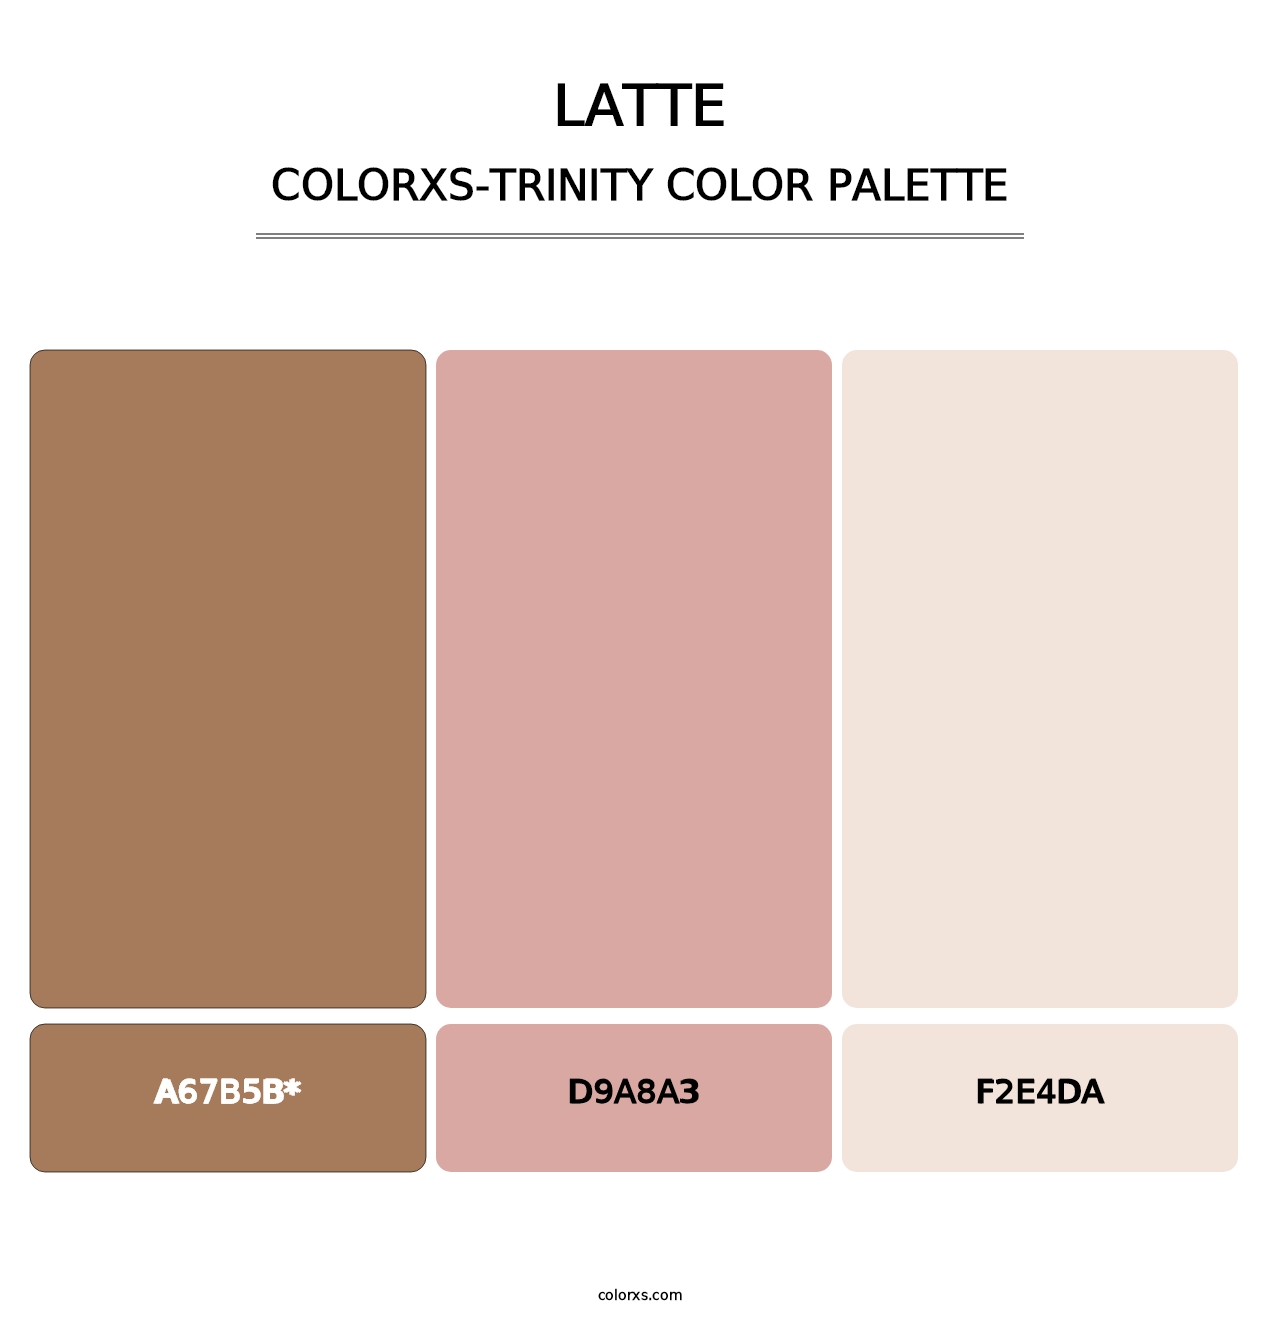 Latte - Colorxs Trinity Palette